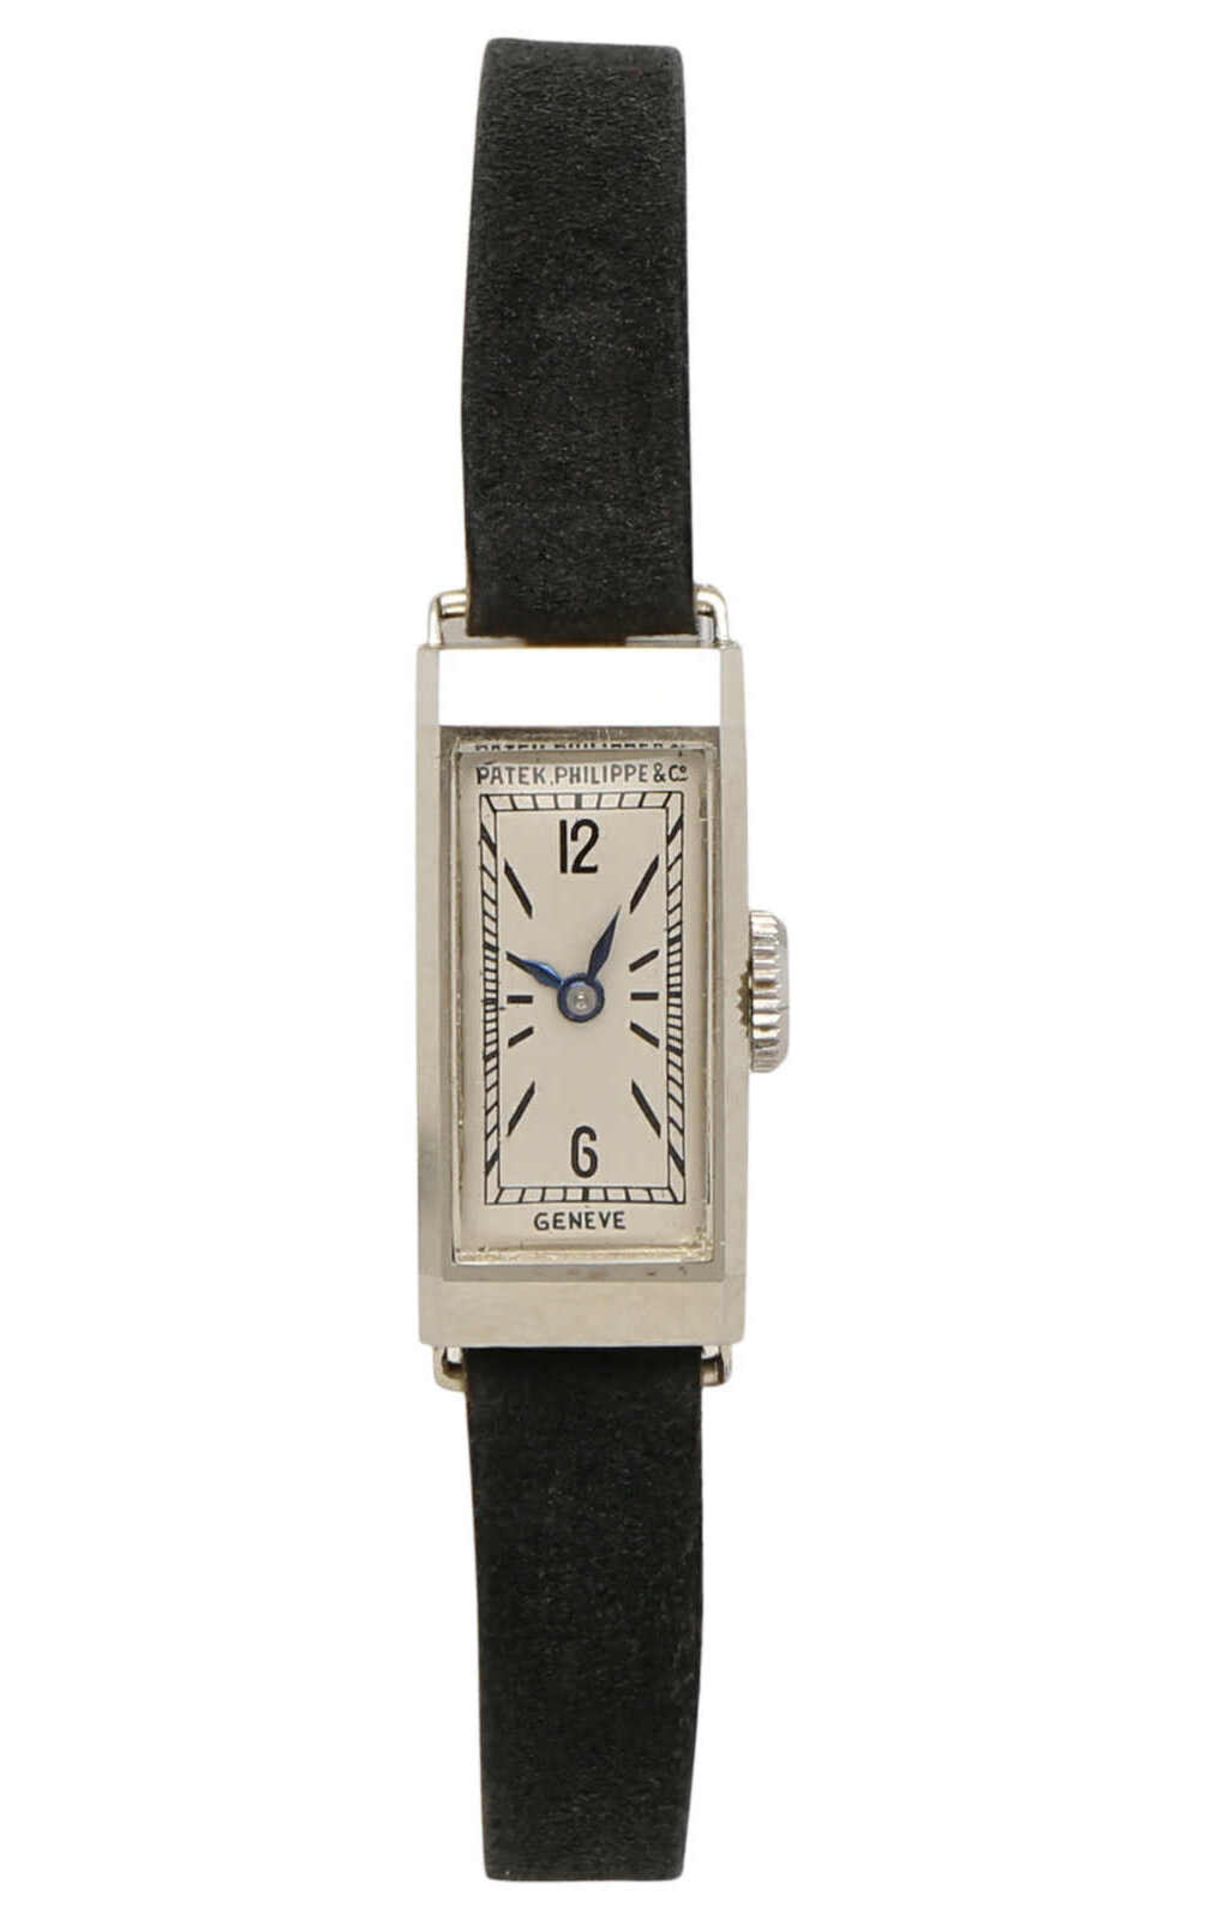 (*) PATEK PHILIPPE Damenarmbanduhr Sehr seltene Patek Philippe Art Déco Uhr aus dem Jahr 1938 in